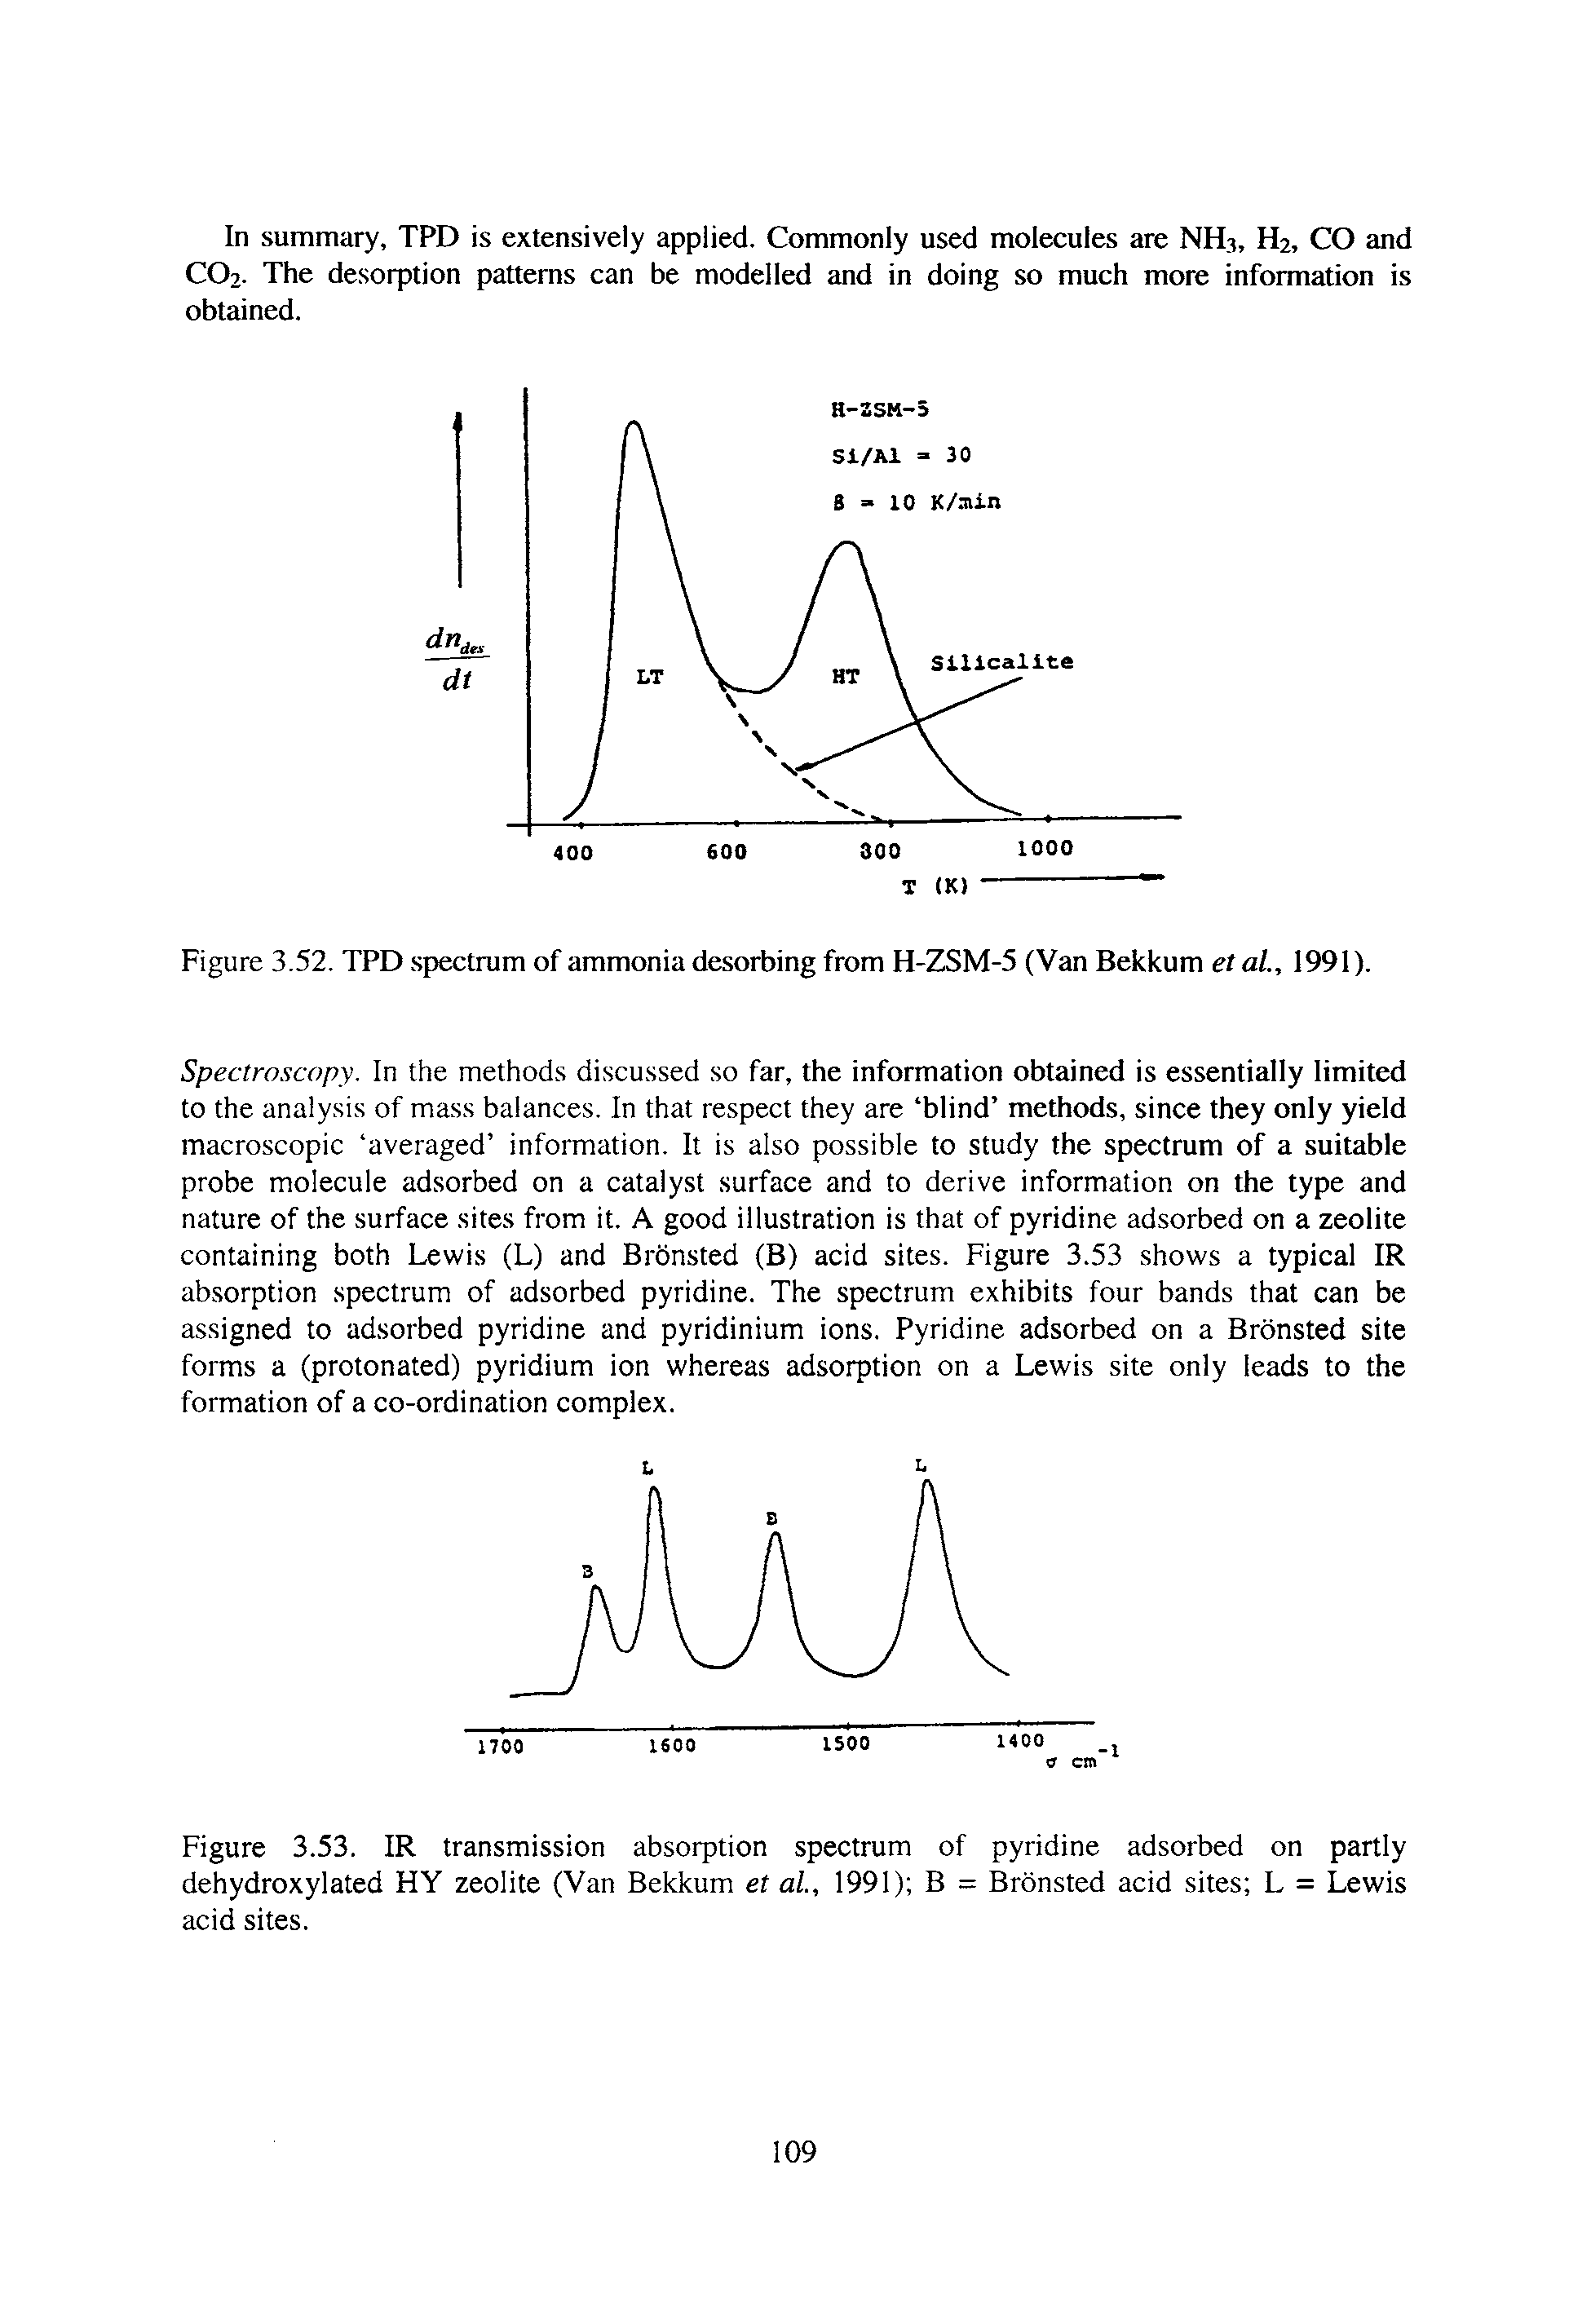 Figure 3.53. IR transmission absorption spectrum of pyridine adsorbed on partly dehydroxylated HY zeolite (Van Bekkum et al, 1991) B = Bronsted acid sites L = Lewis acid sites.